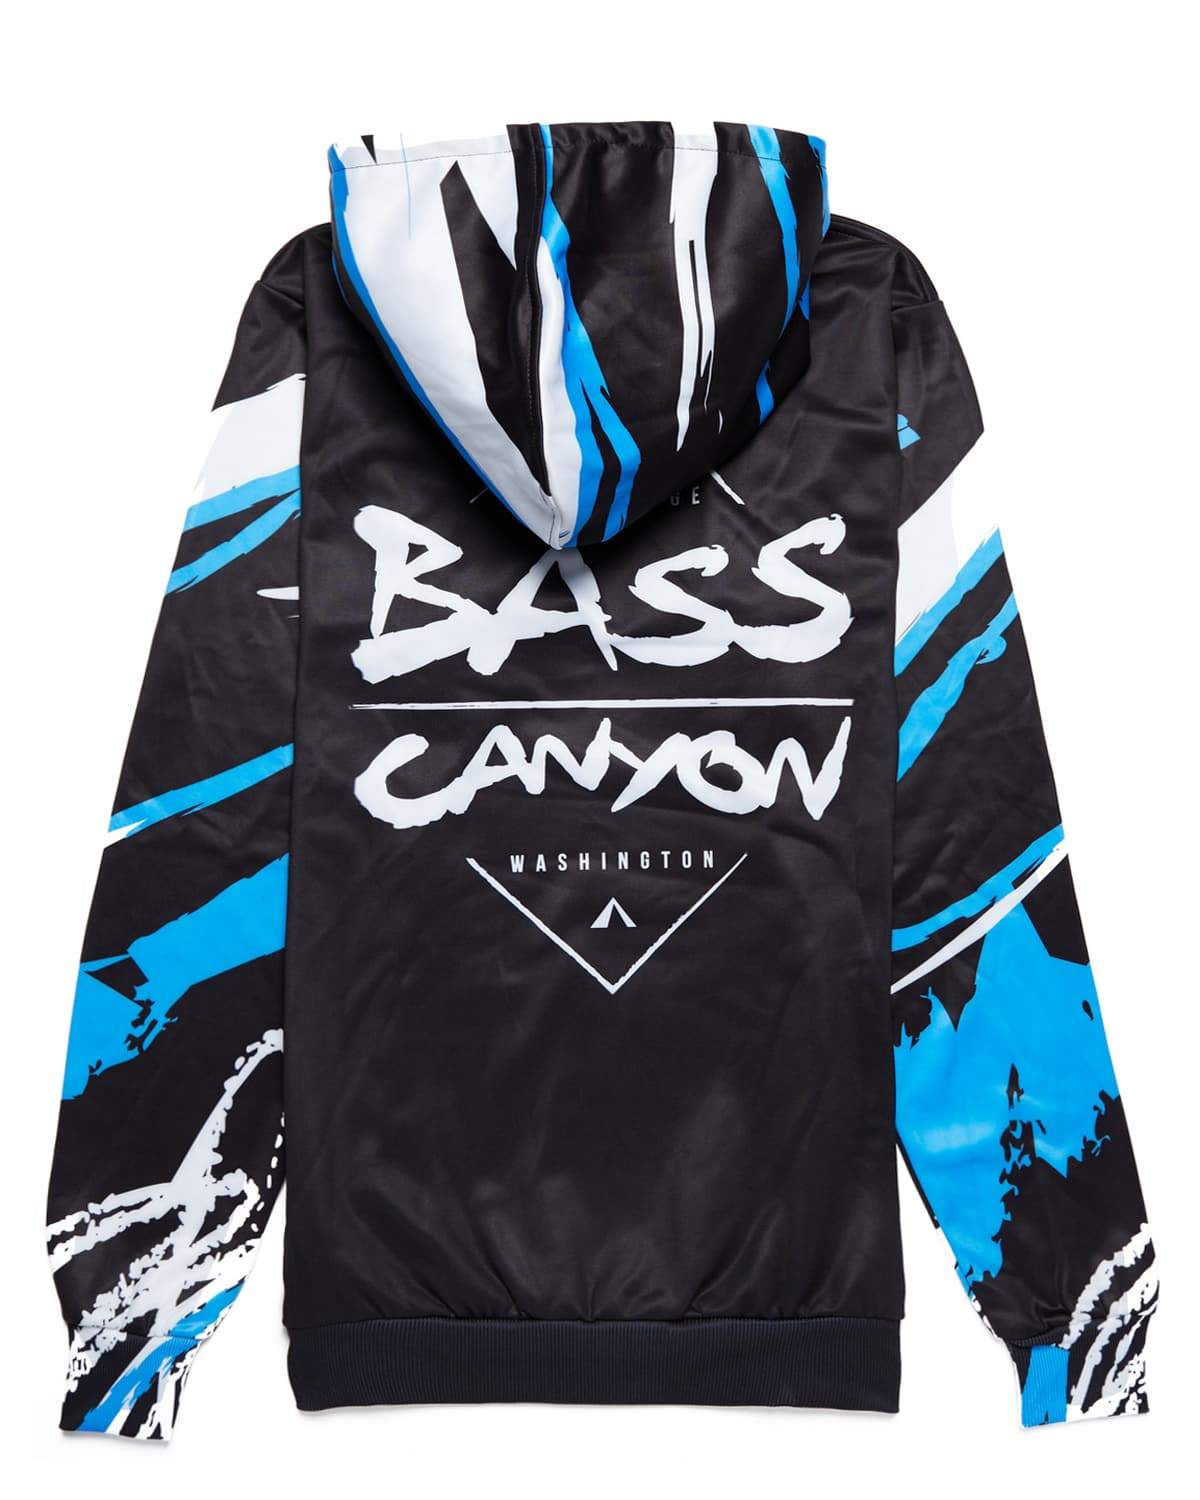 Blue Blue White S Logo - Bass Canyon 'Swirls' Hoodie - Black/Blue/White | Excision